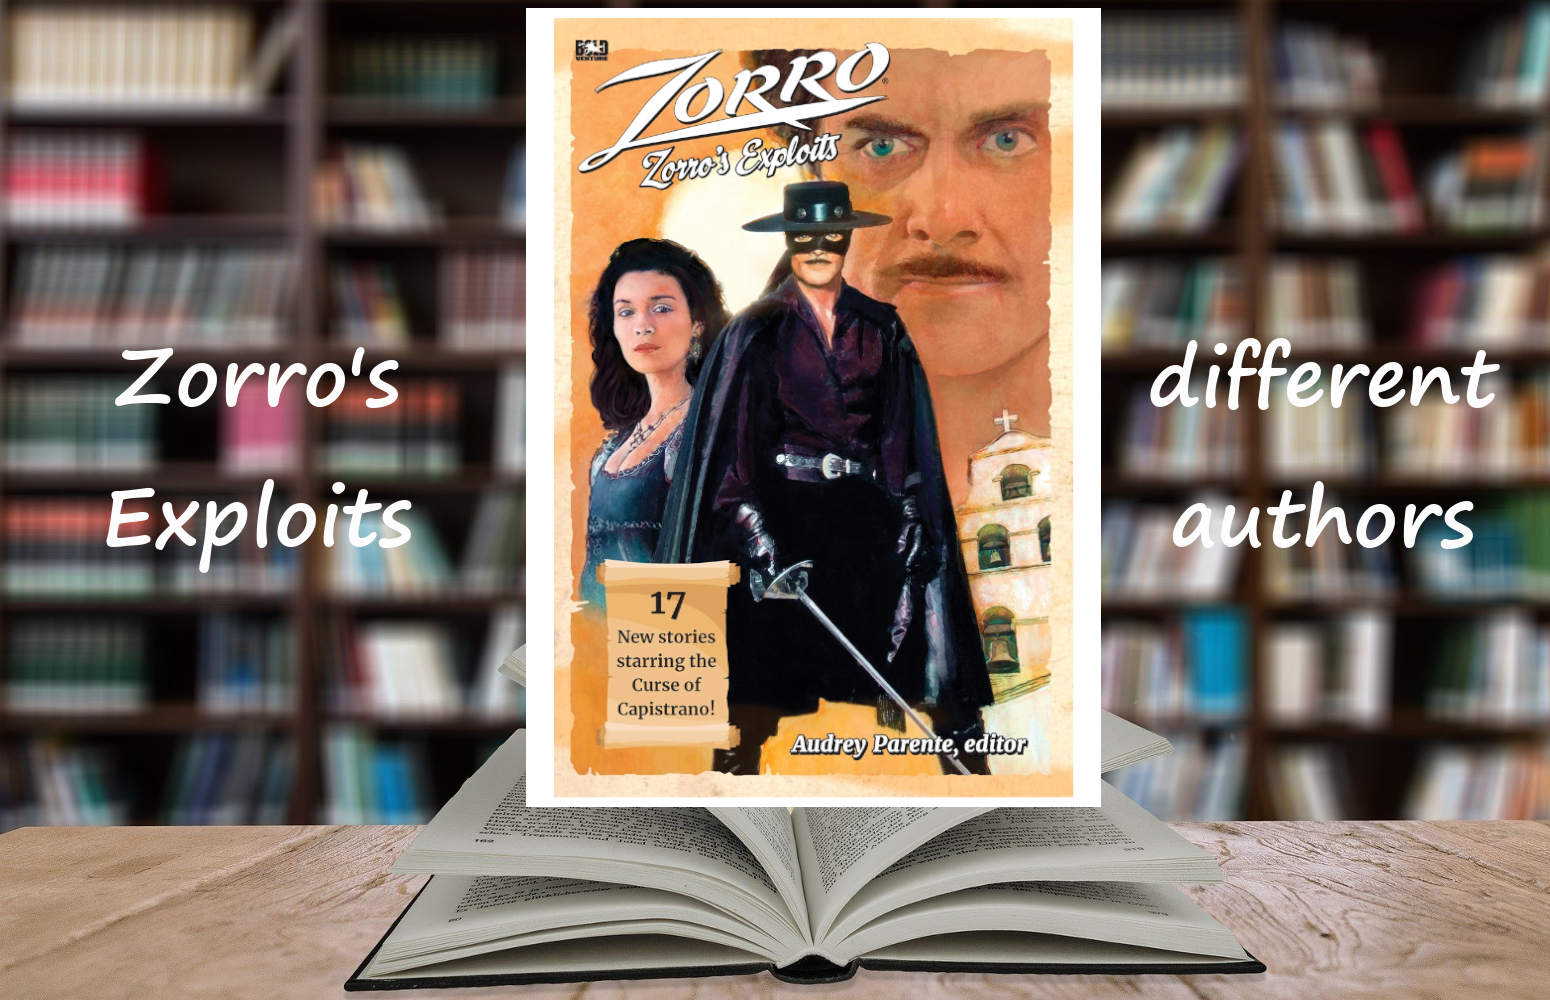 Zorro's Exploits by different authors Zorro stories